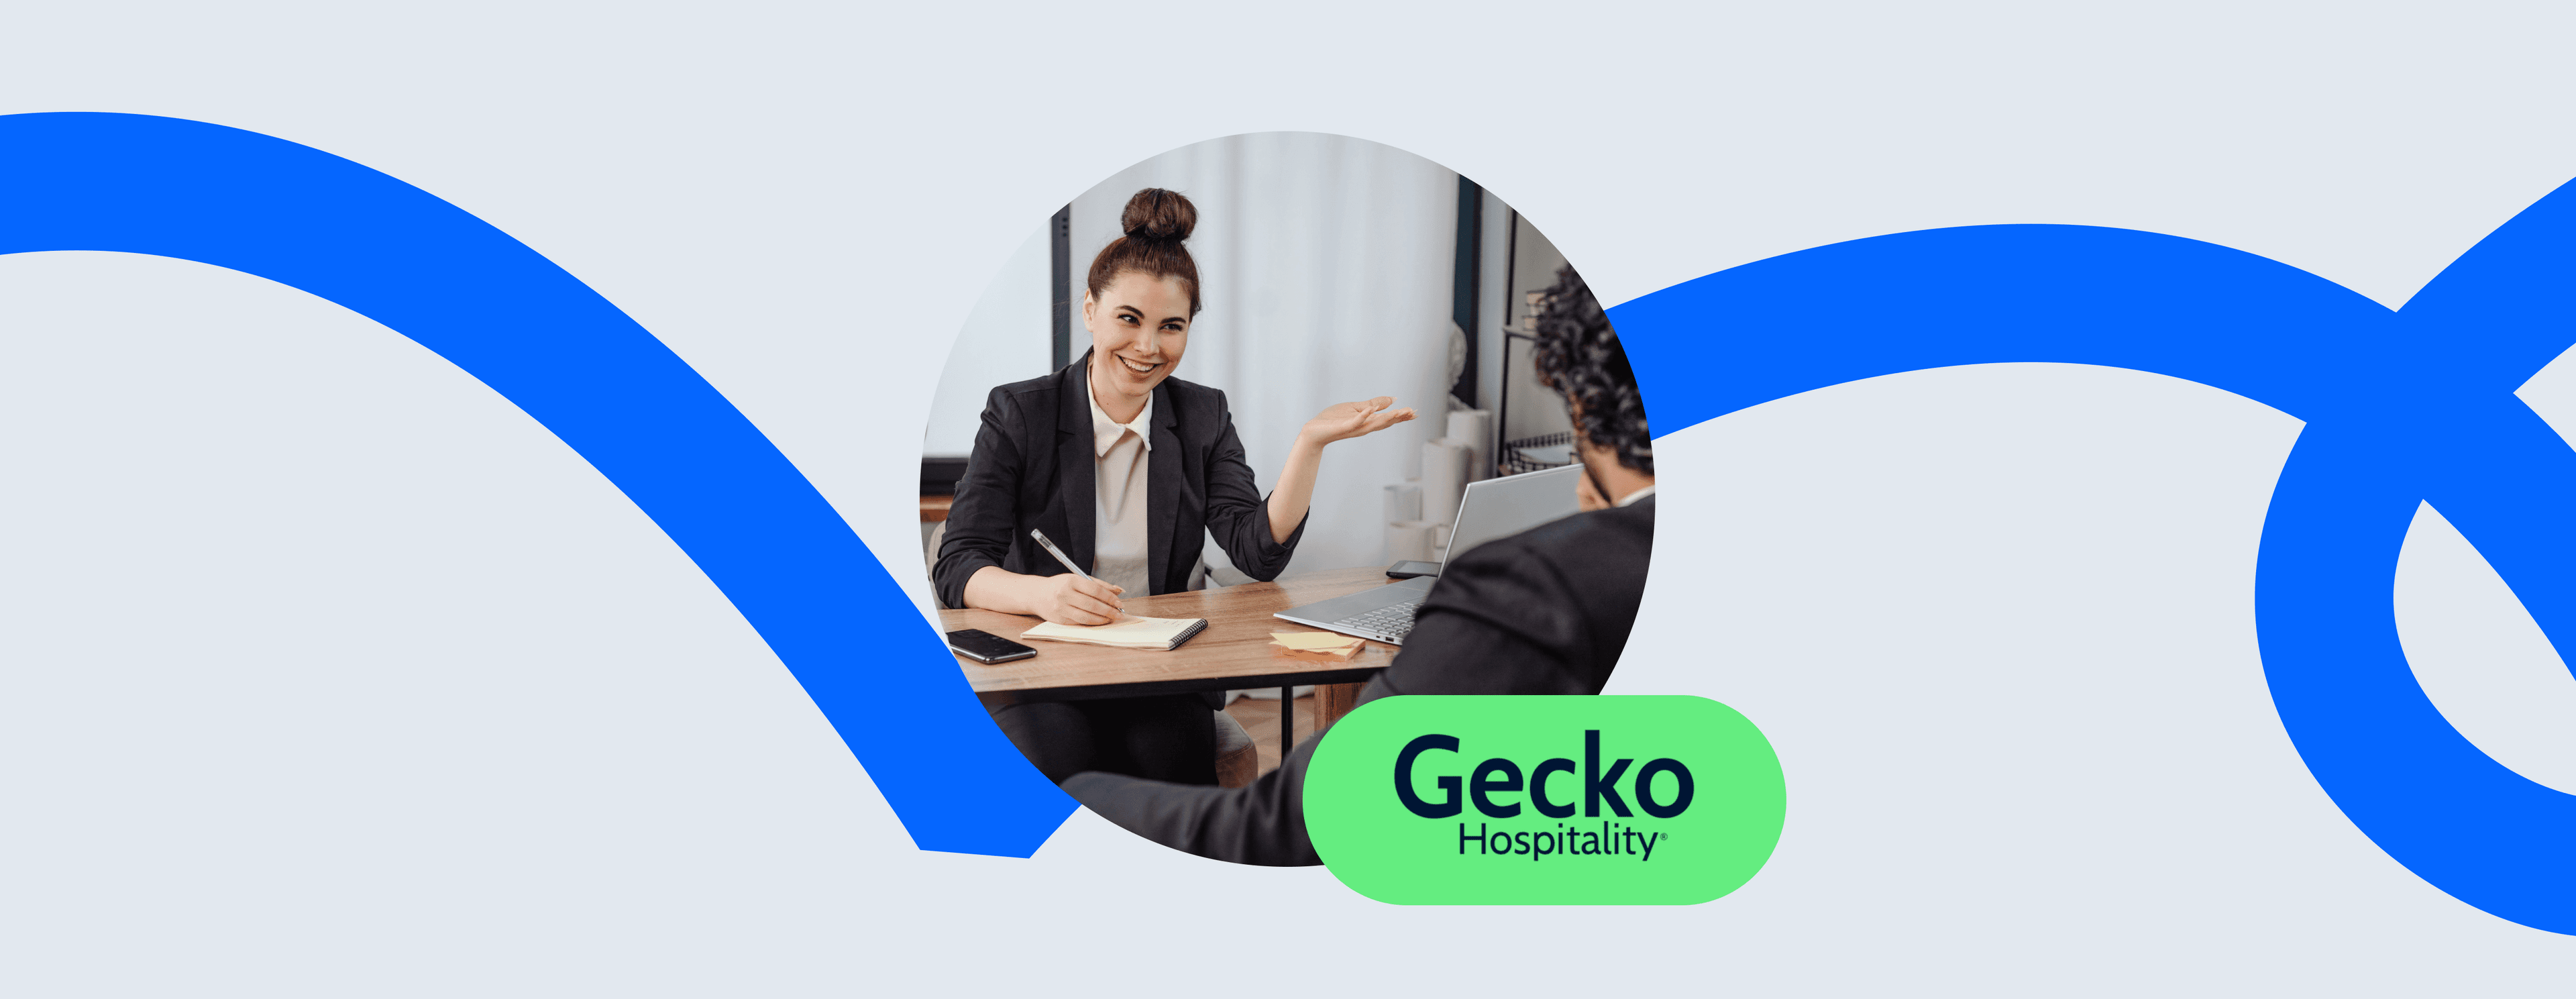 Gecko Hospitality Reaches 90% Customer Service Automation